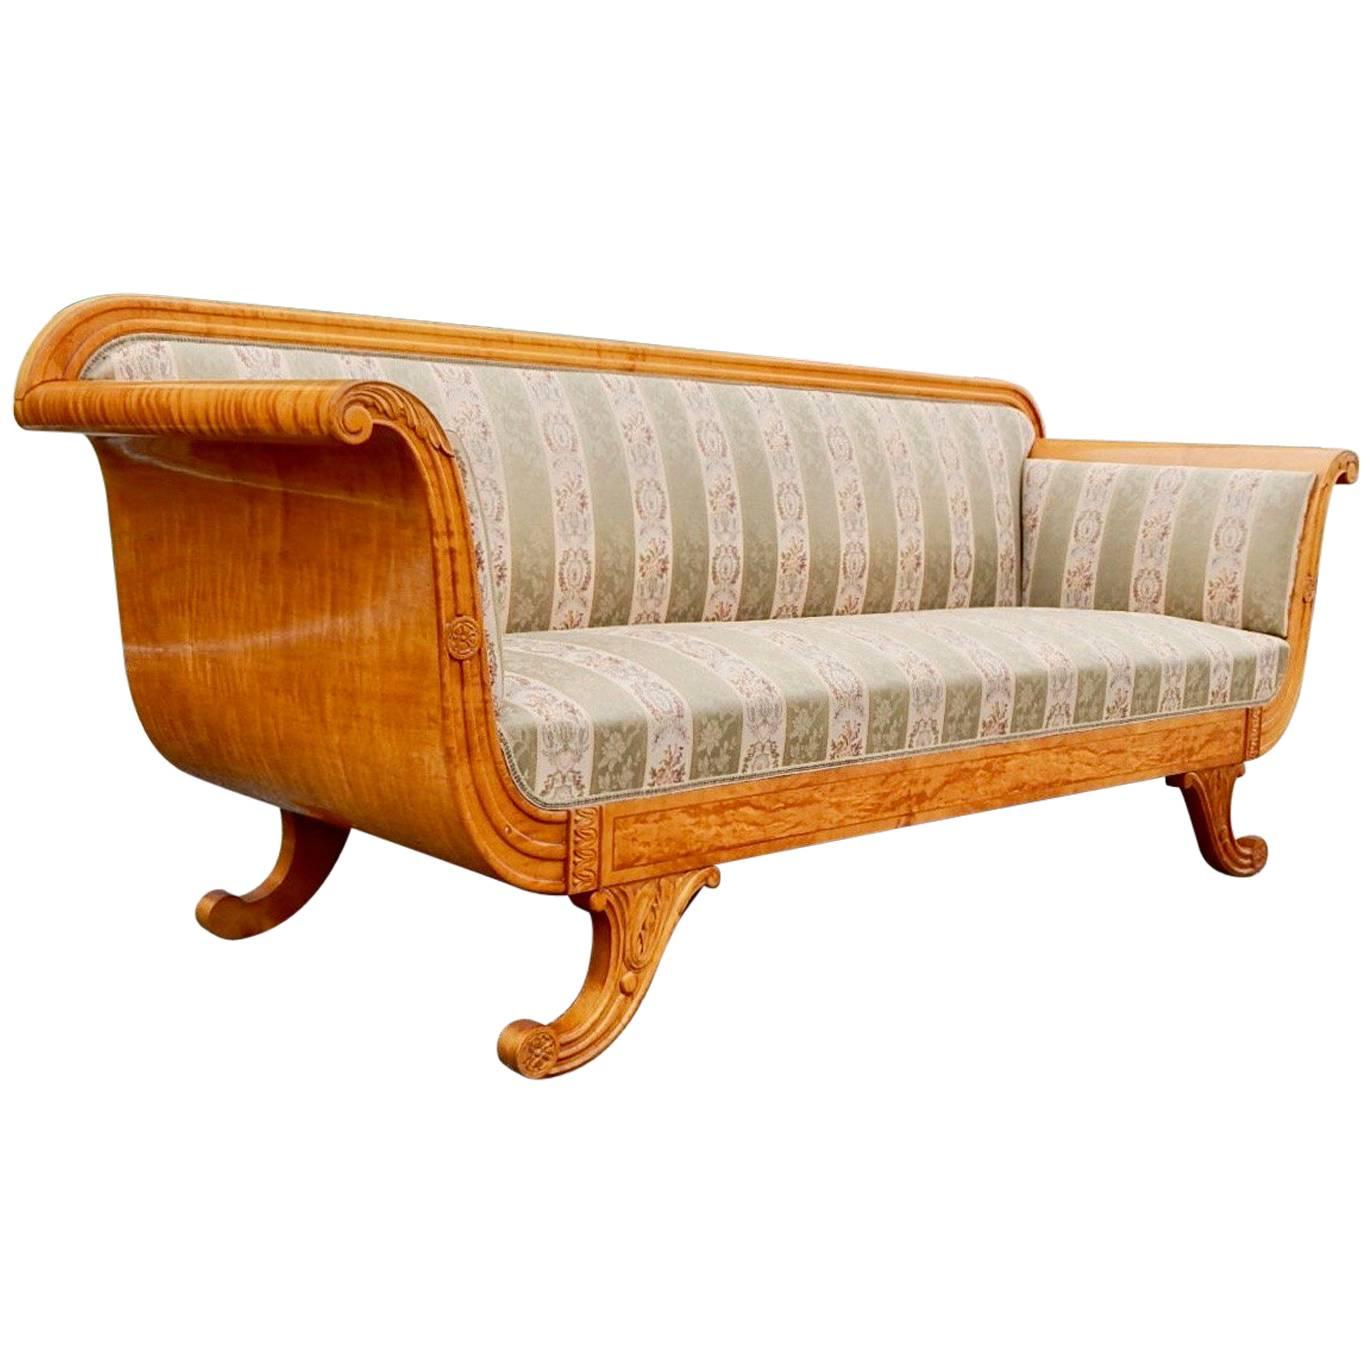 Biedermeier Revival Sofa with Panelled Sides in Golden Birch, Sweden, 1920s For Sale